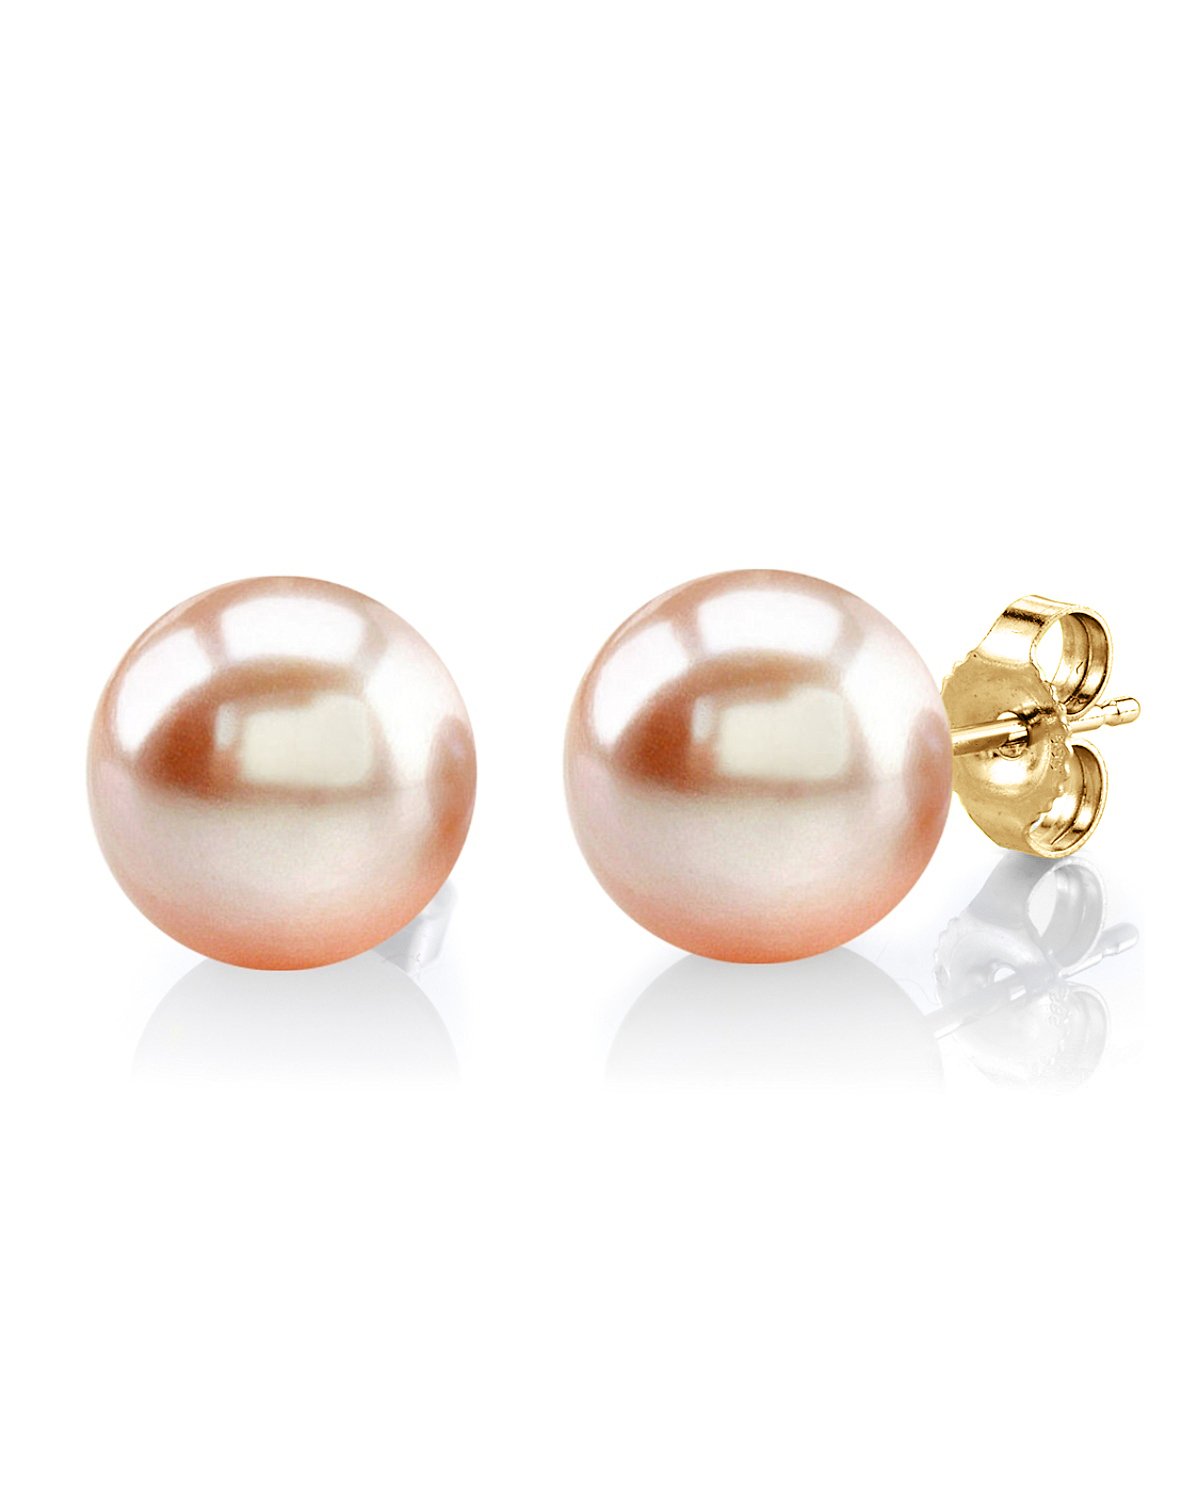 10mm Peach Freshwater Round Pearl Stud Earrings - Model Image